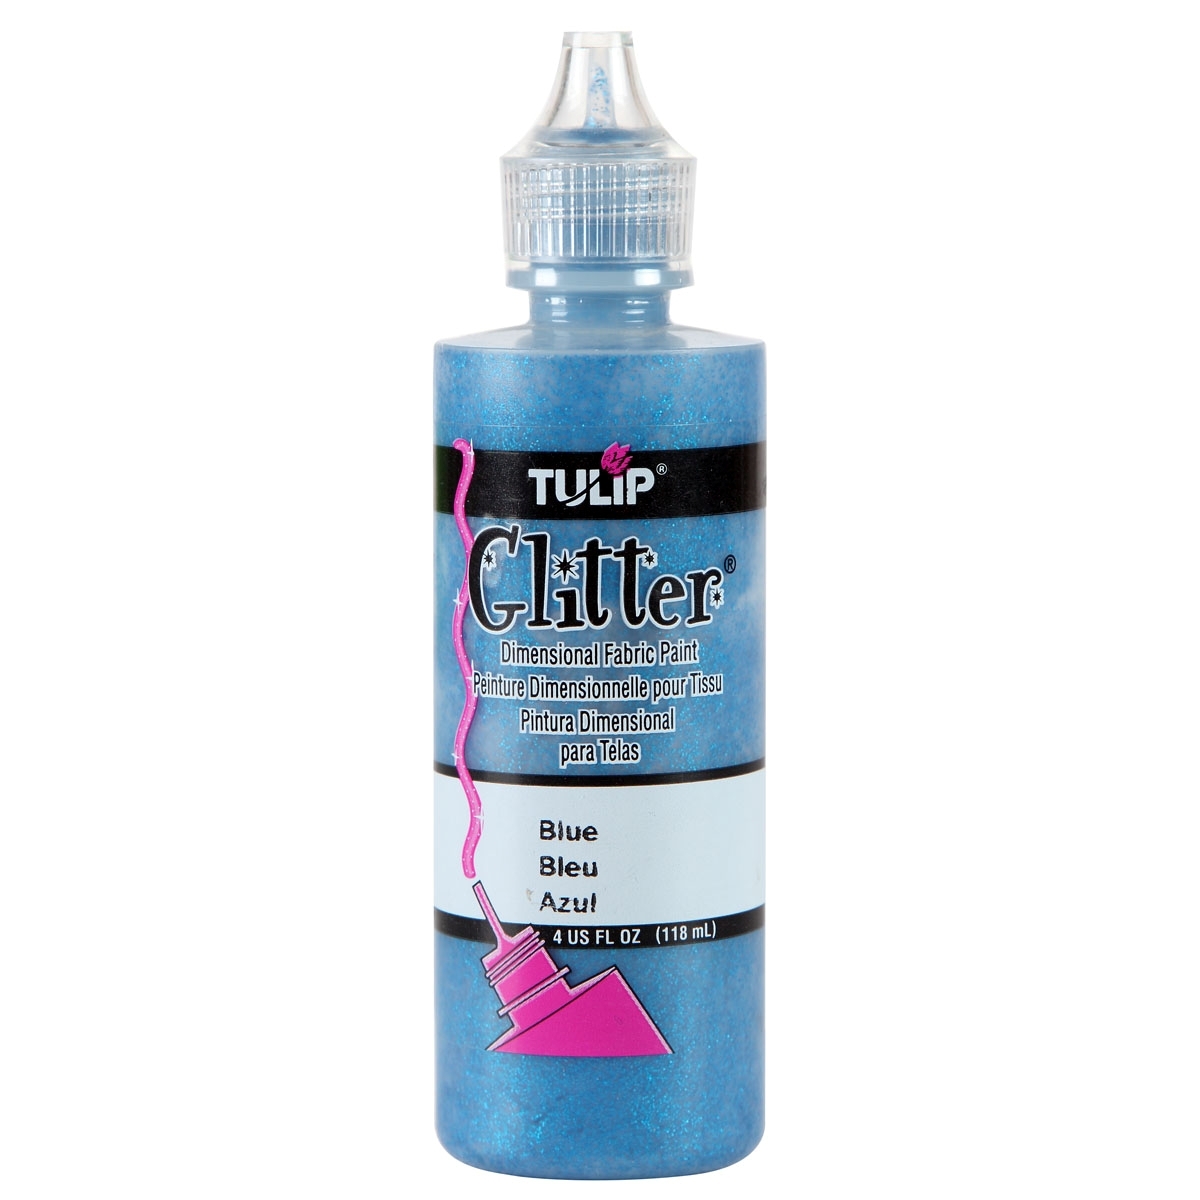 TULIP Glitter Fabric Spray Paint, Black Diamond